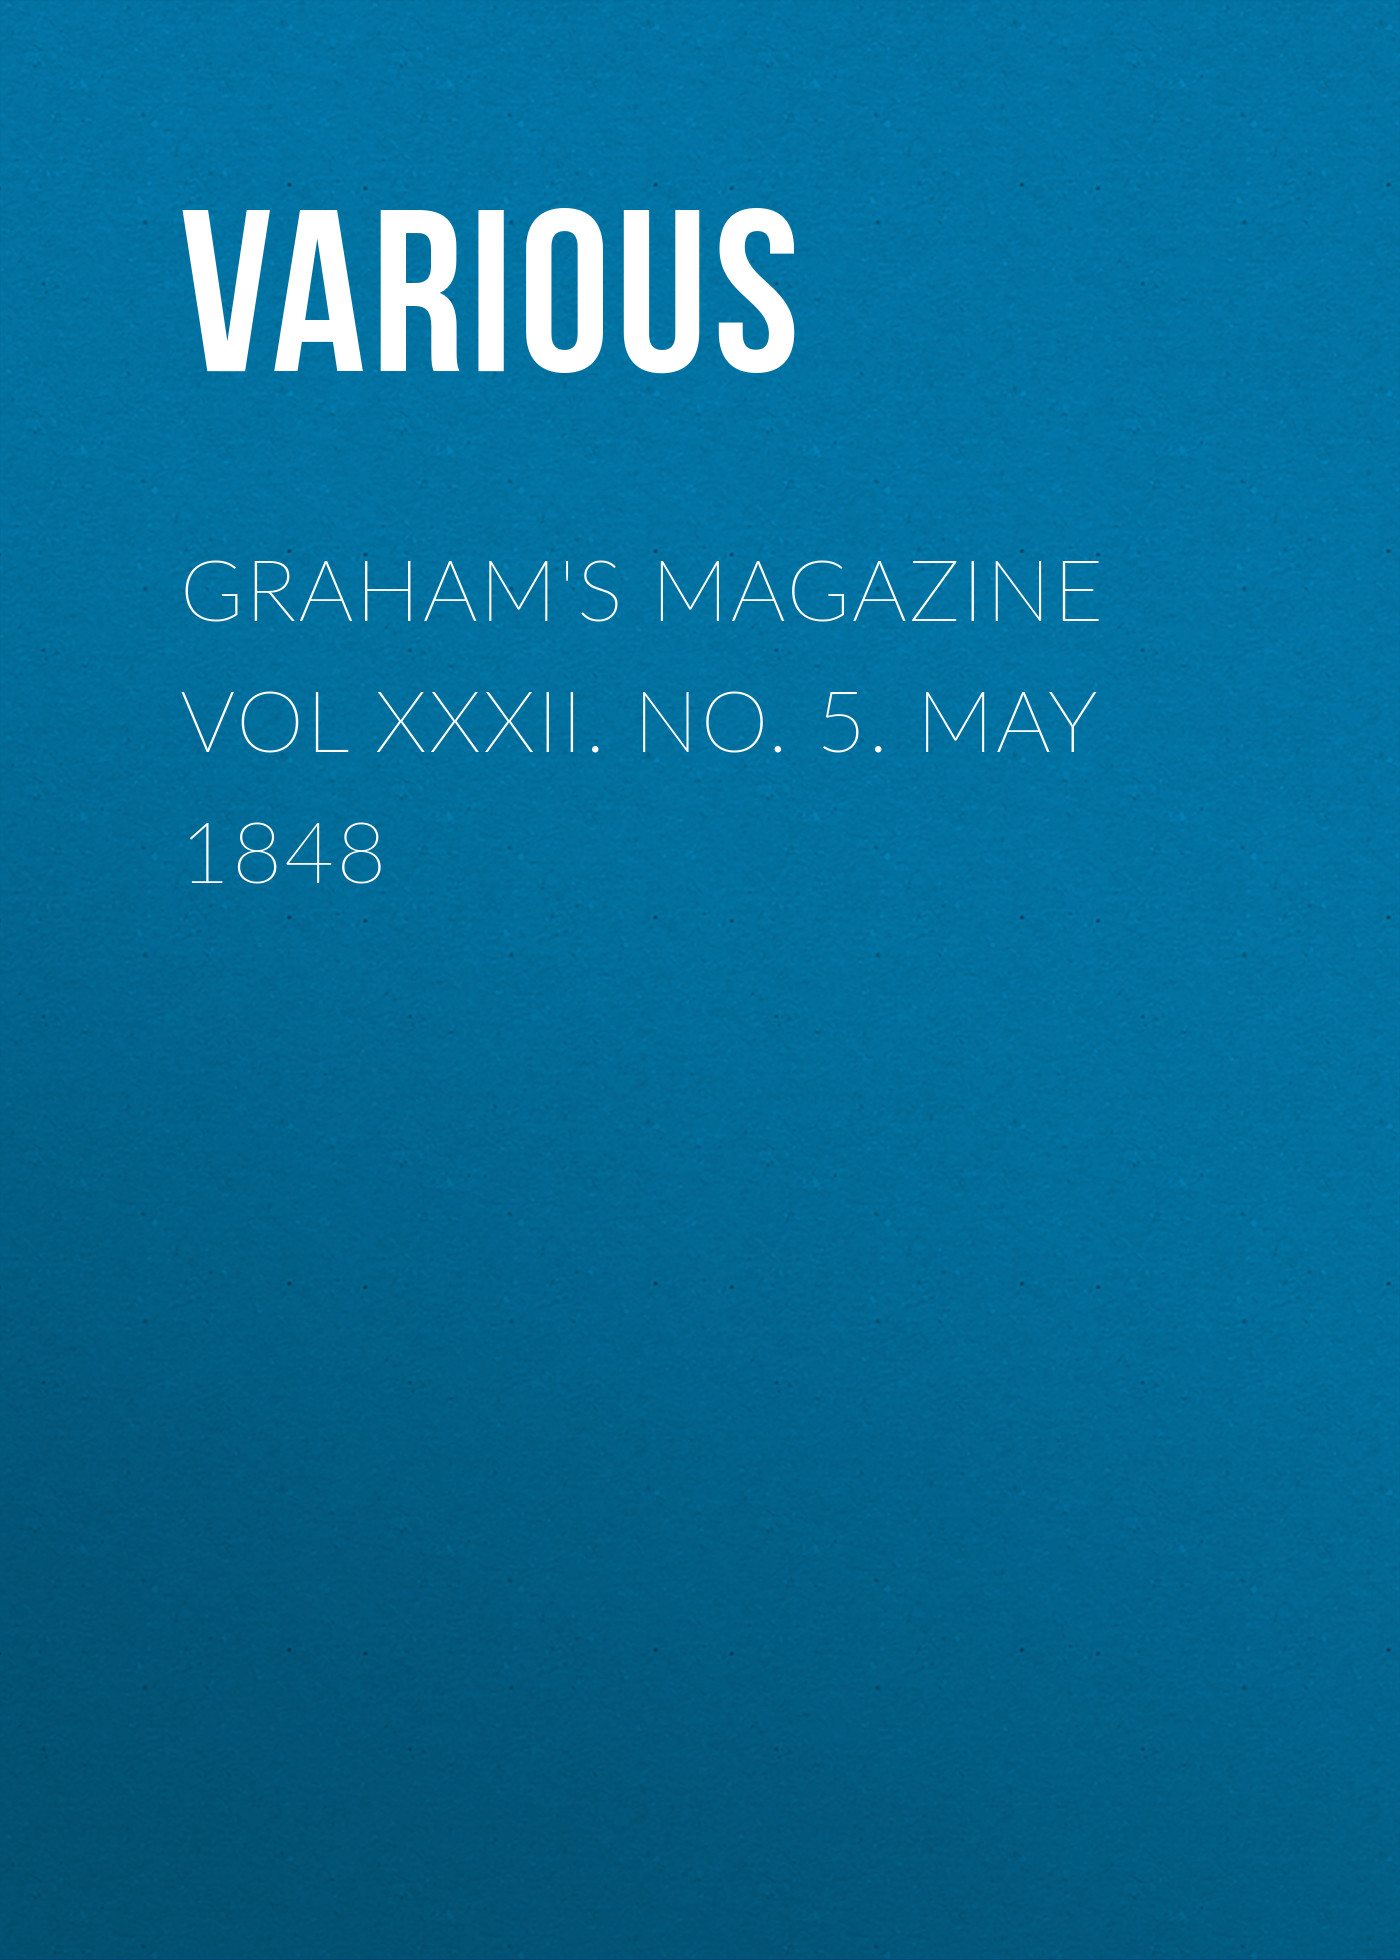 Graham's Magazine Vol XXXII. No. 5. May 1848